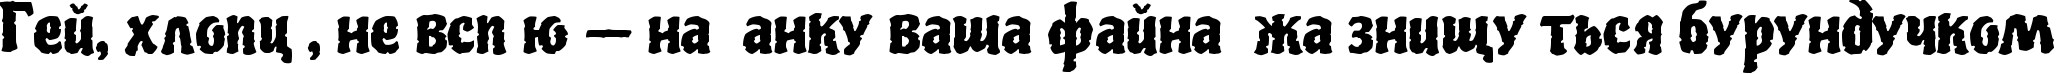 Пример написания шрифтом Piedra текста на украинском